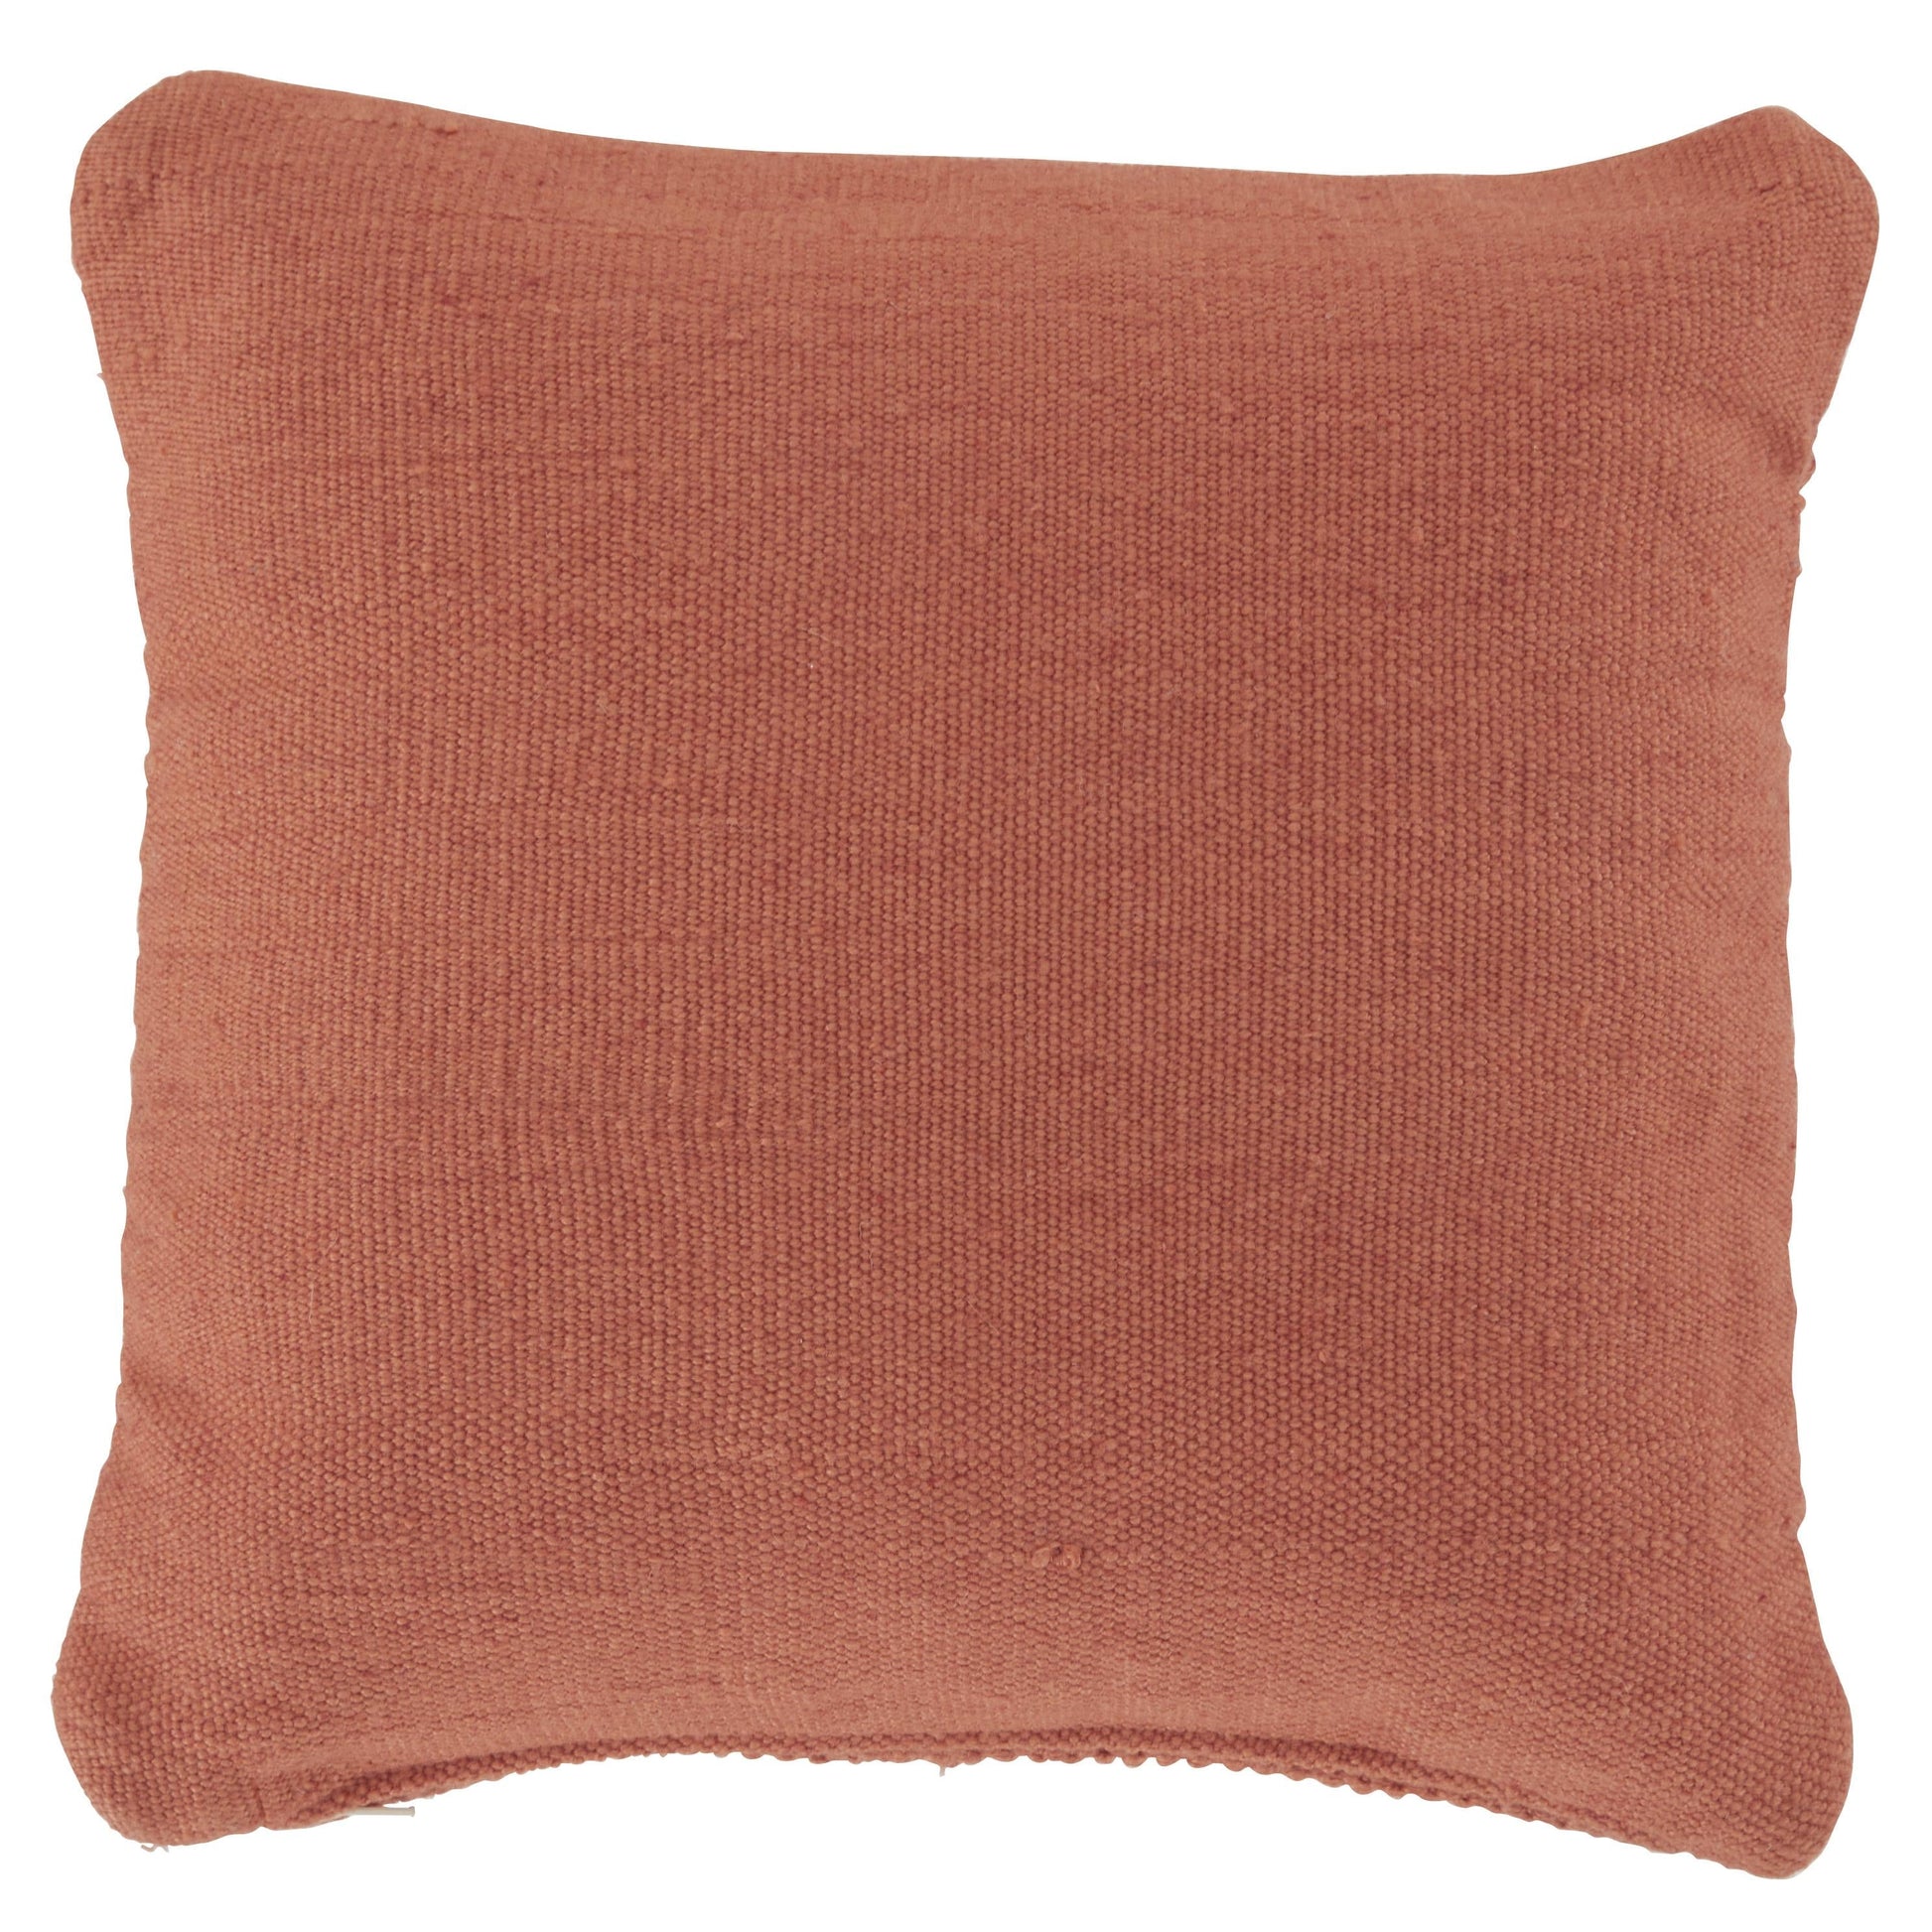 Signature Design by Ashley Decorative Pillows Decorative Pillows A1001014